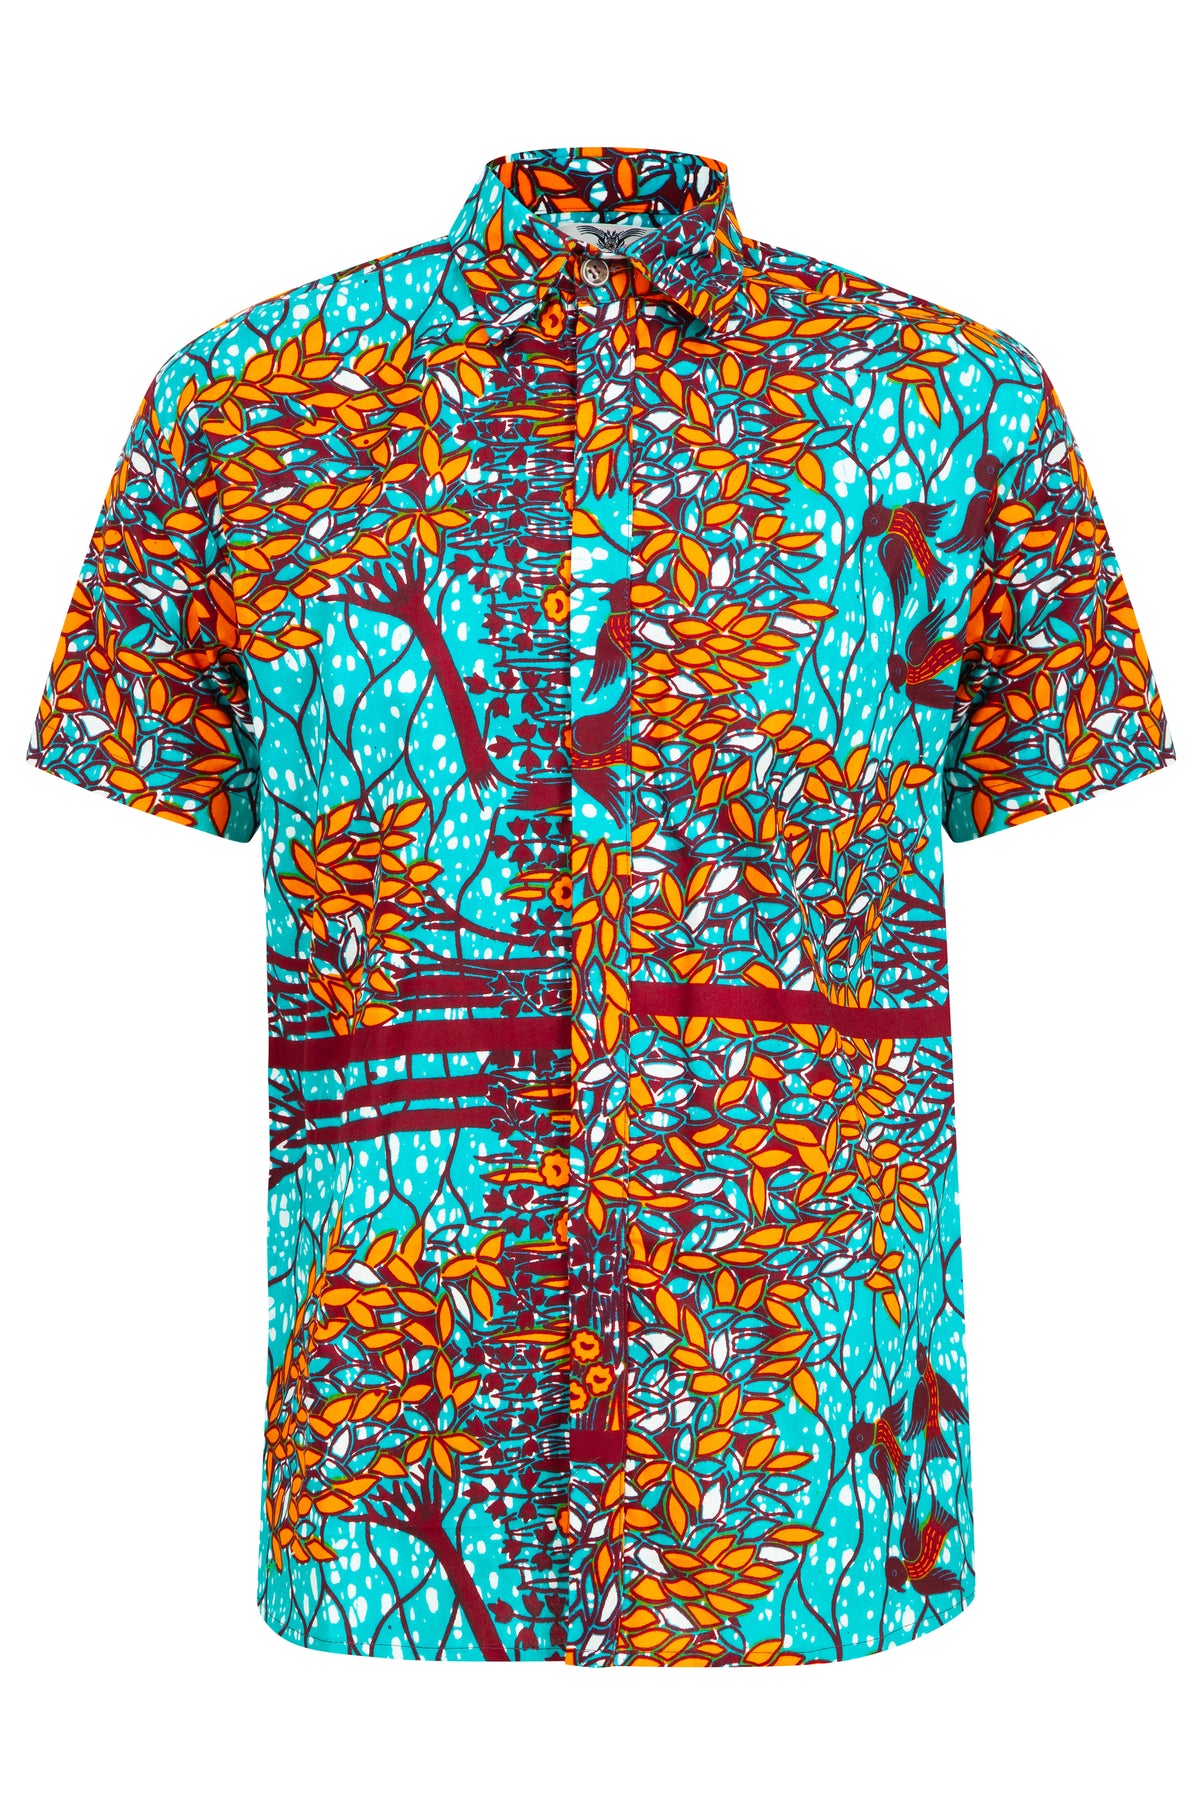 African print shirt ohema ohene